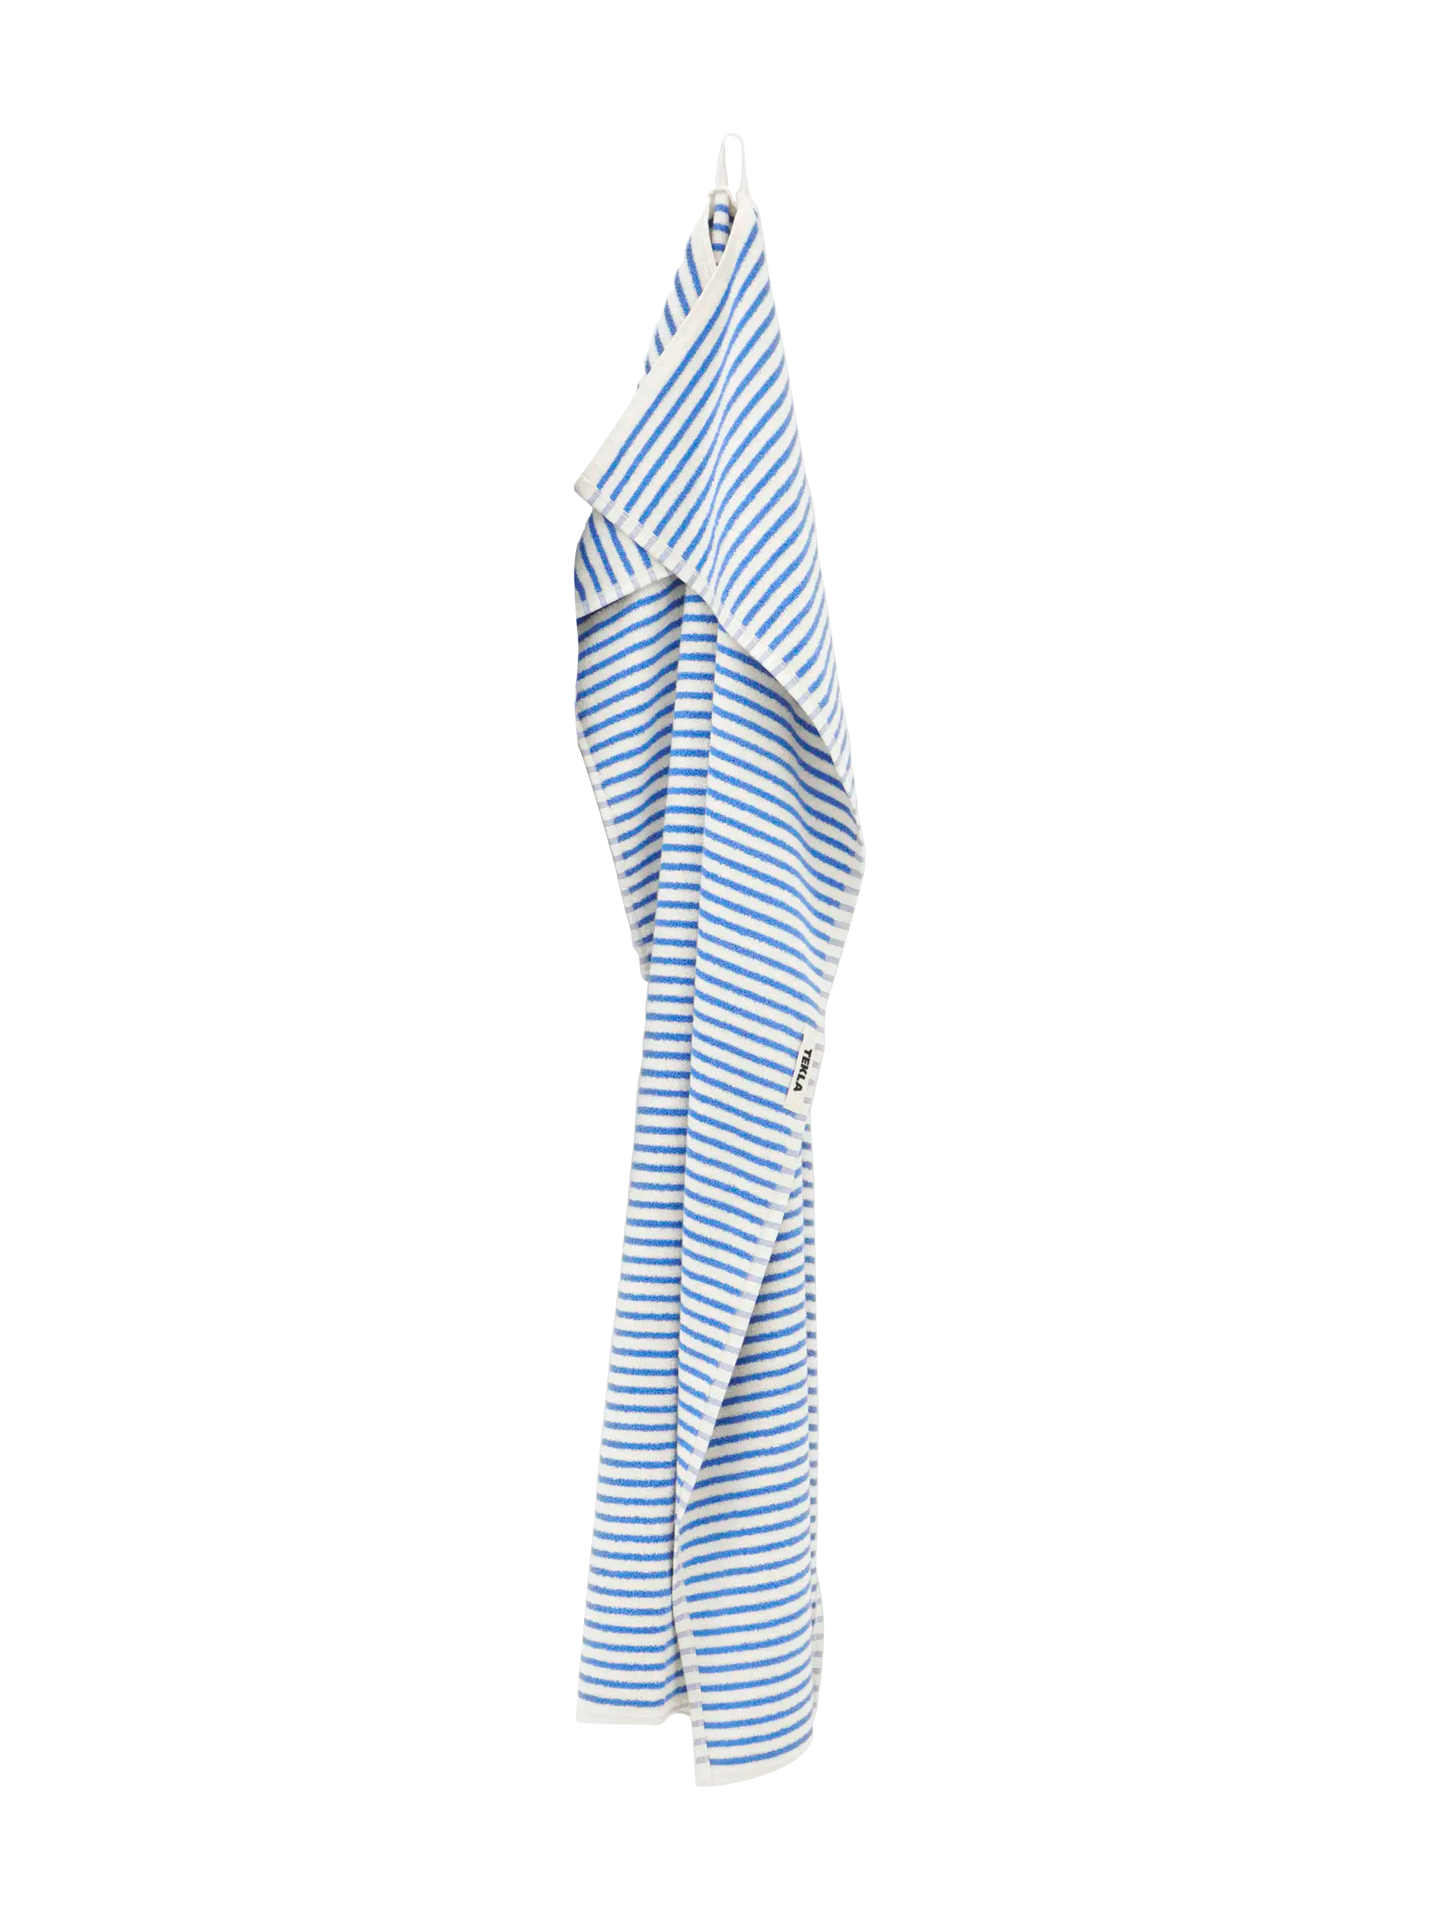 Terry Bath Towel, Coastal blue stripes